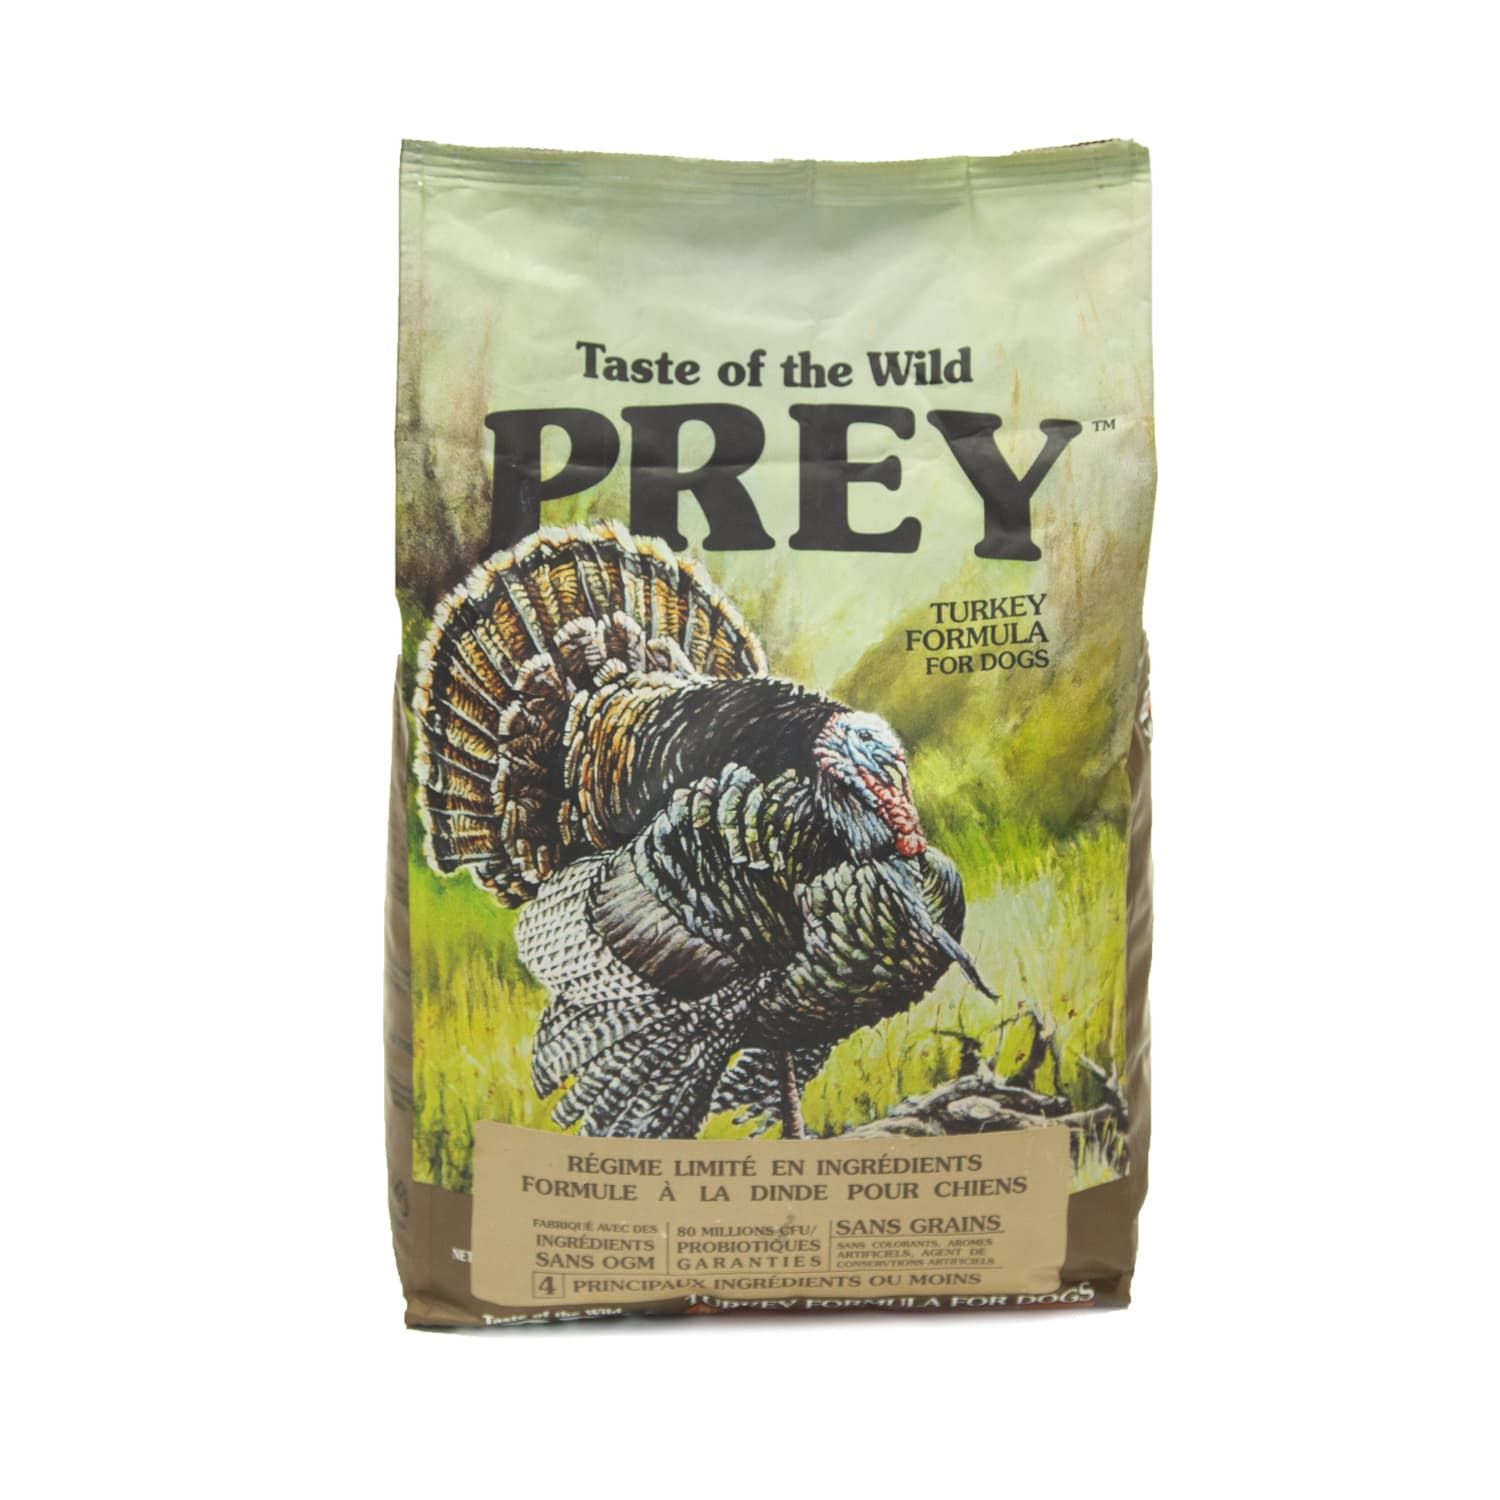 Taste of the Wild Prey Turkey Formula for Dog with Limited Ingredients 3.6kg (DOG)